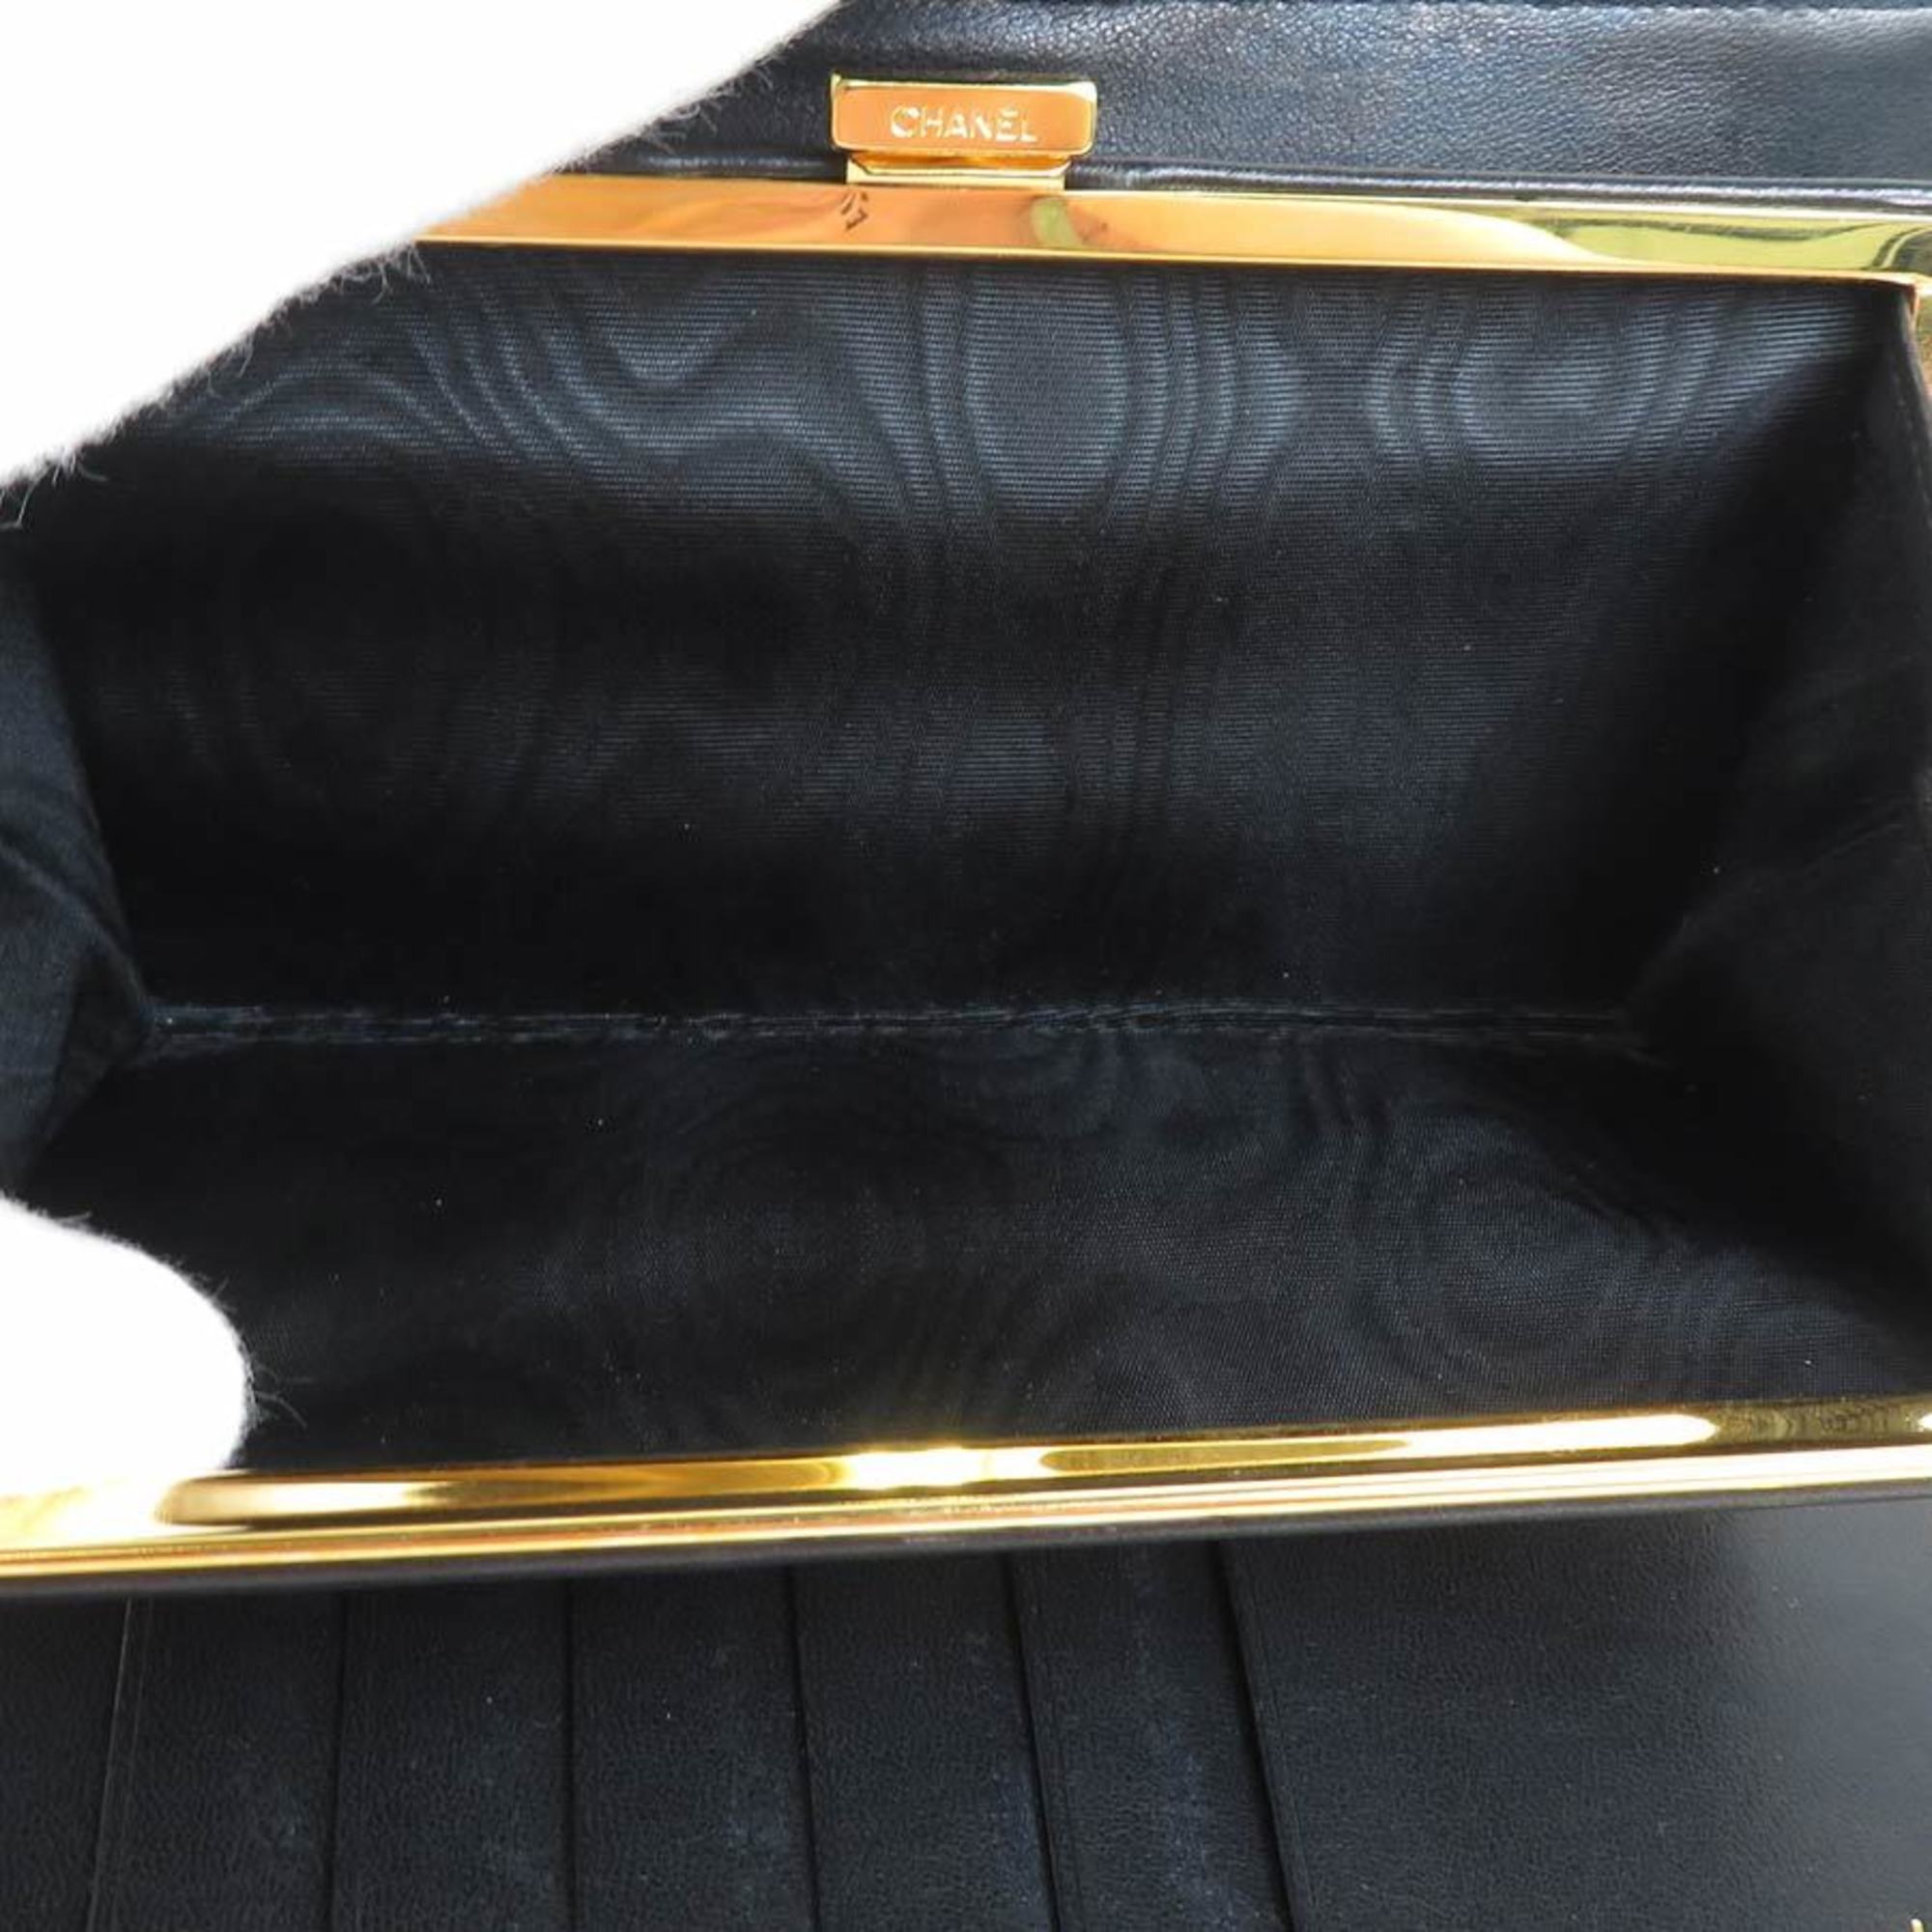 CHANEL Bifold Wallet Coco Mark Caviar Skin Leather Black Women's